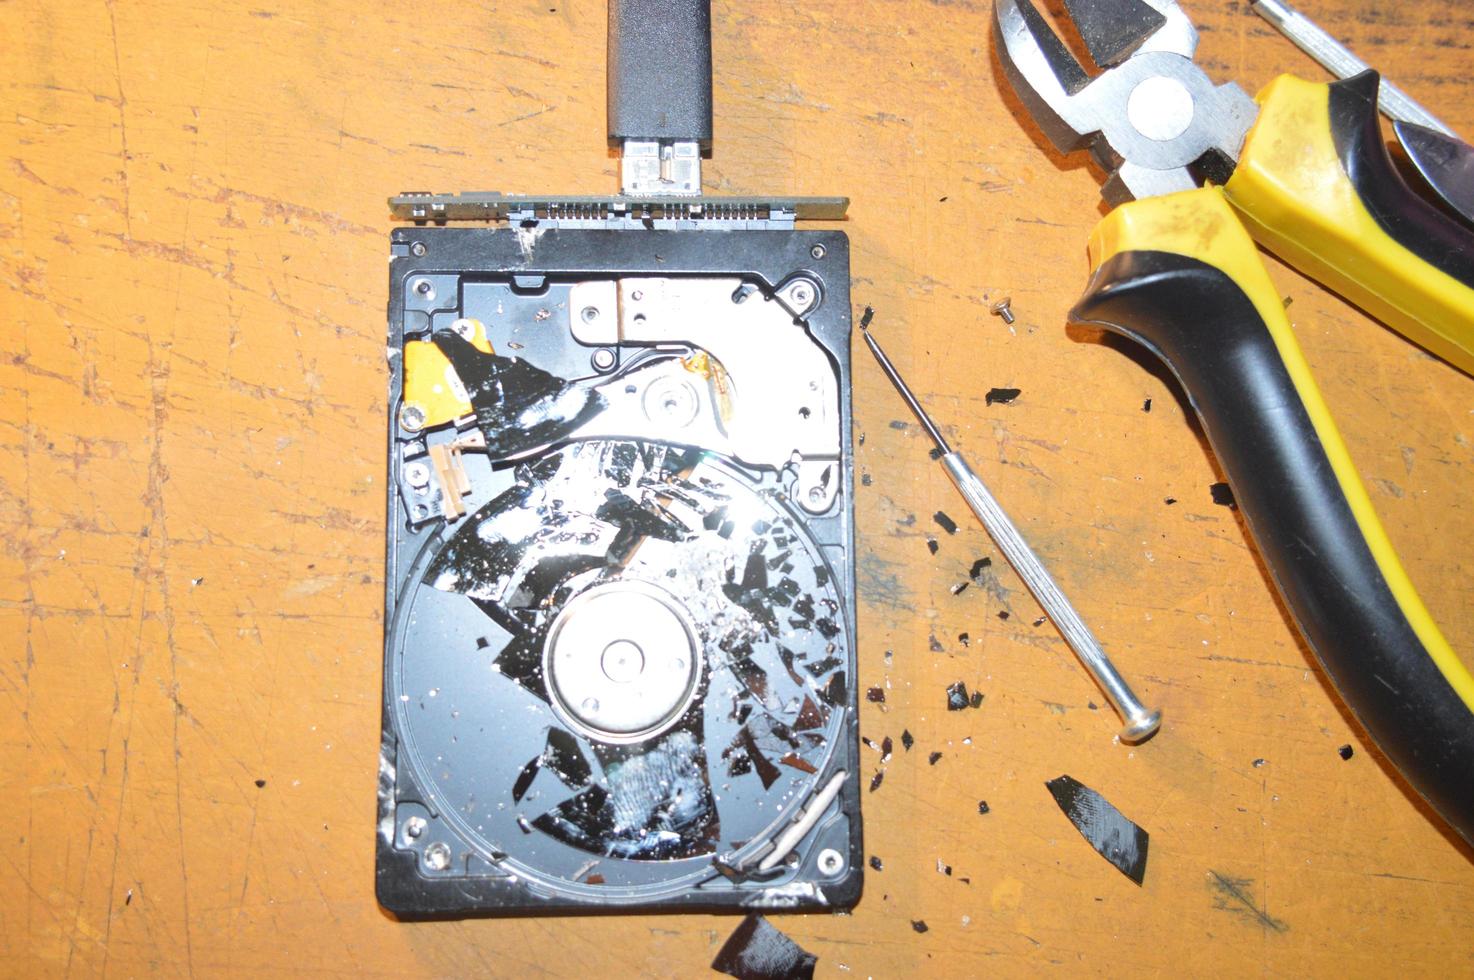 Repair microelectronics computer hard drive photo